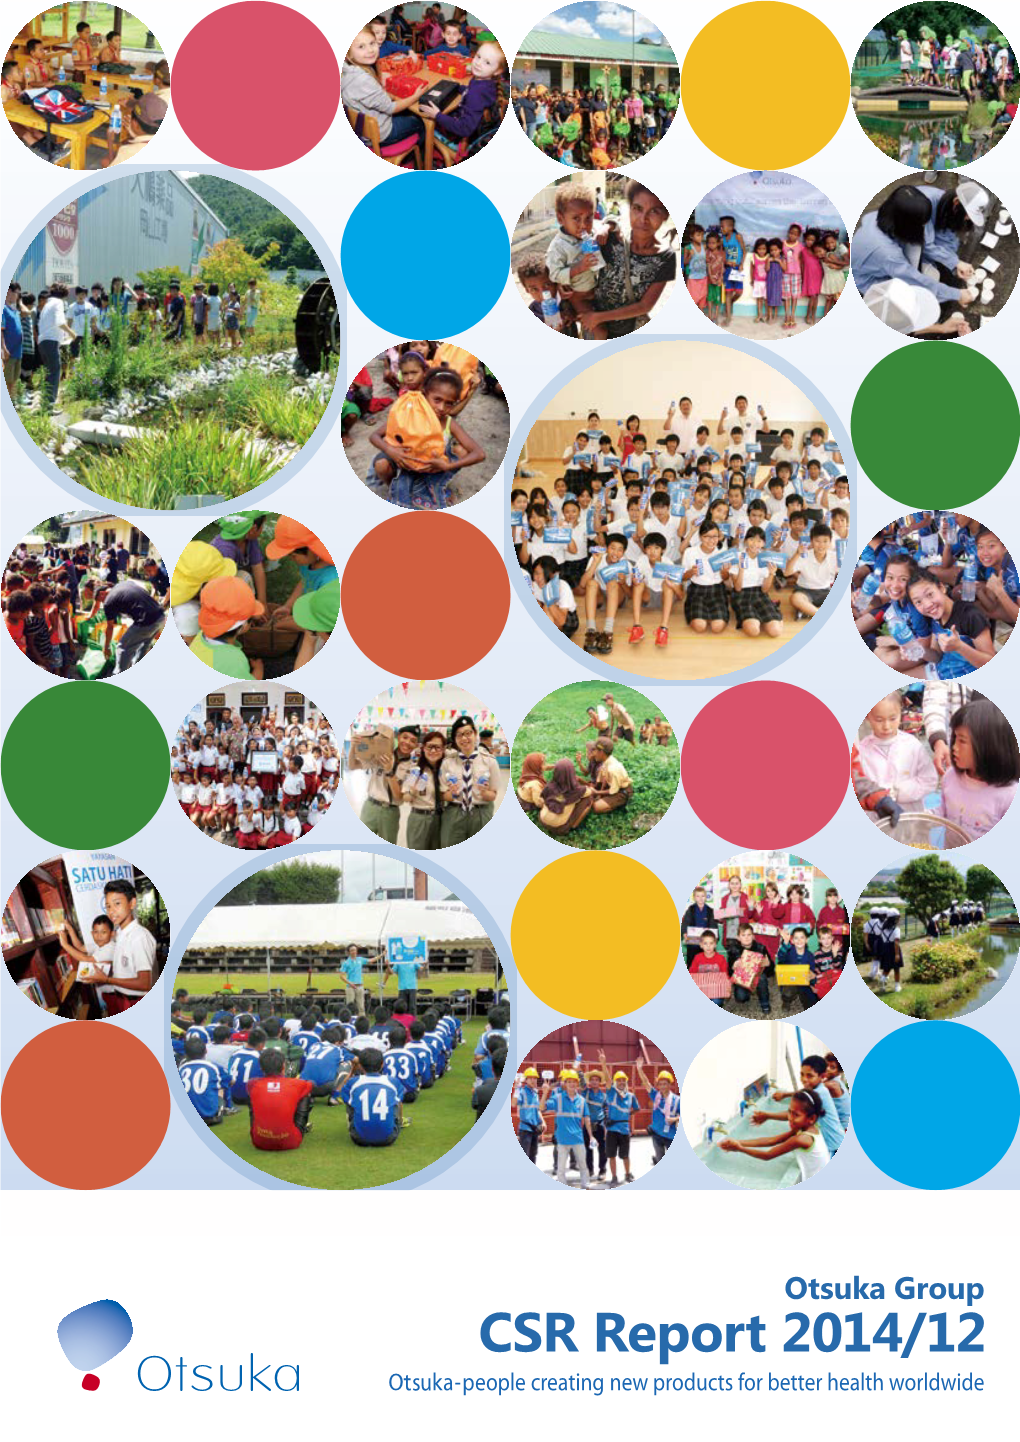 Otsuka Group CSR Report 2014/12